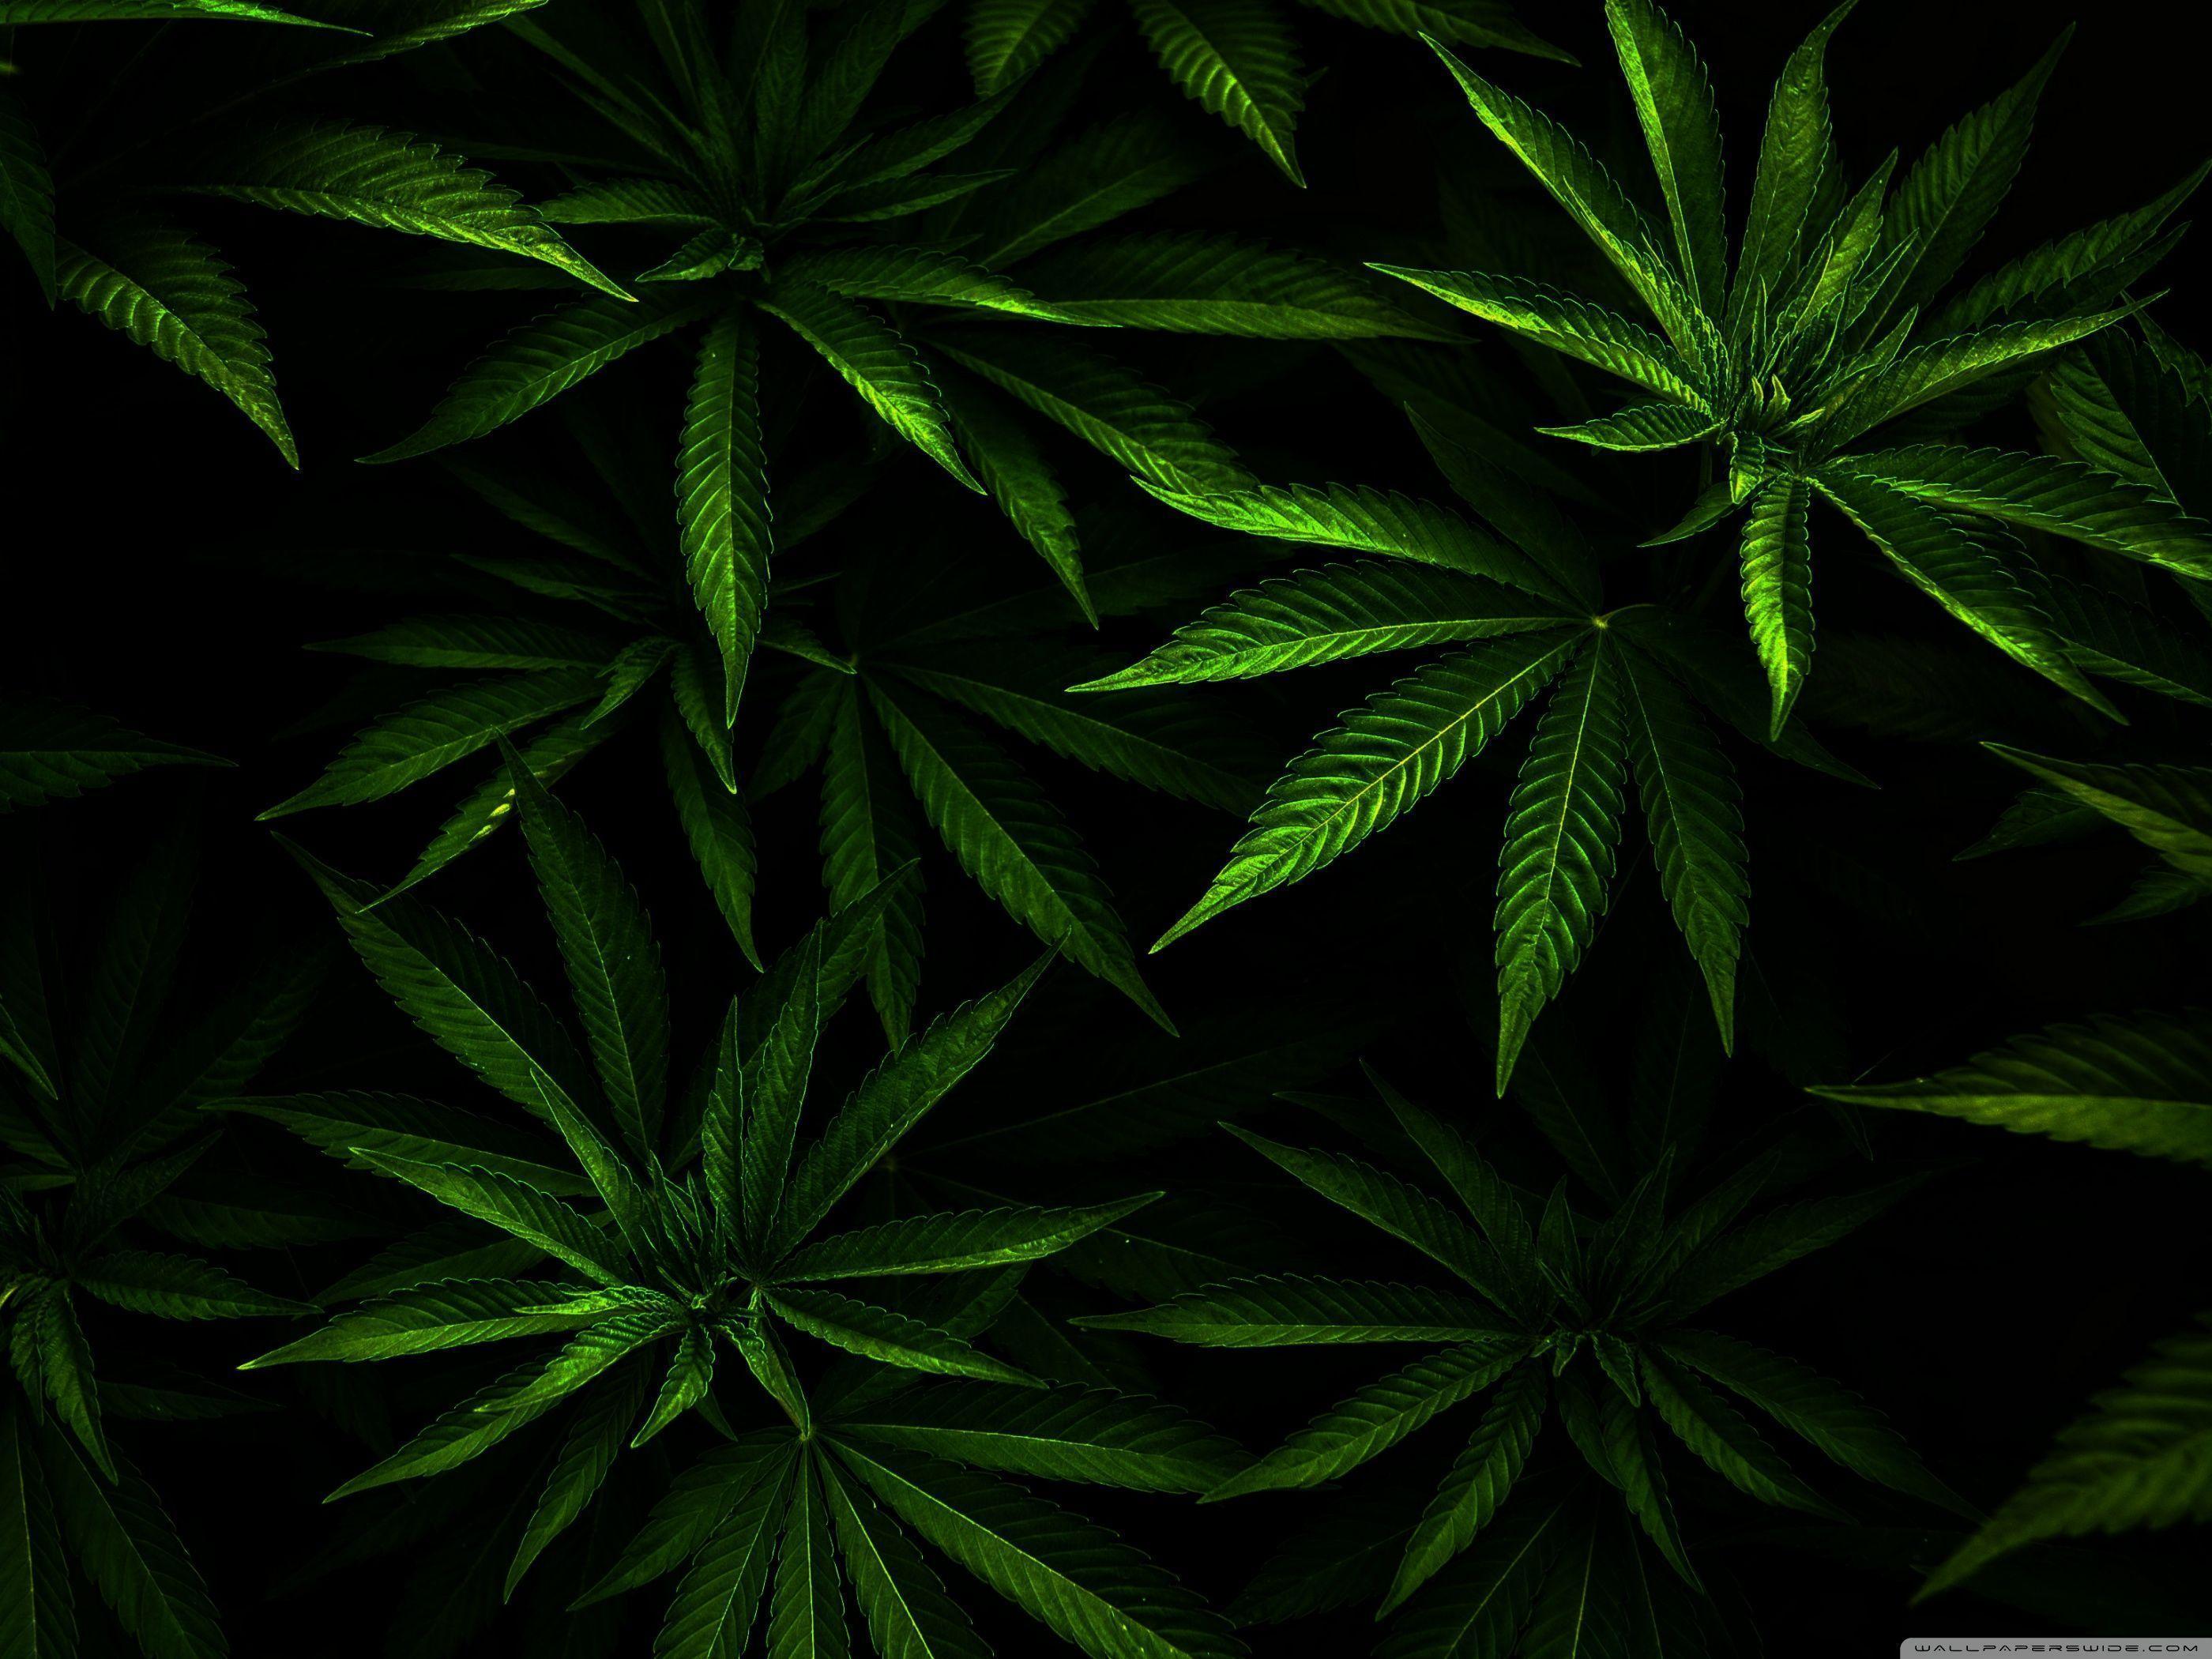 4K Marijuana Wallpaper Free 4K Marijuana Background